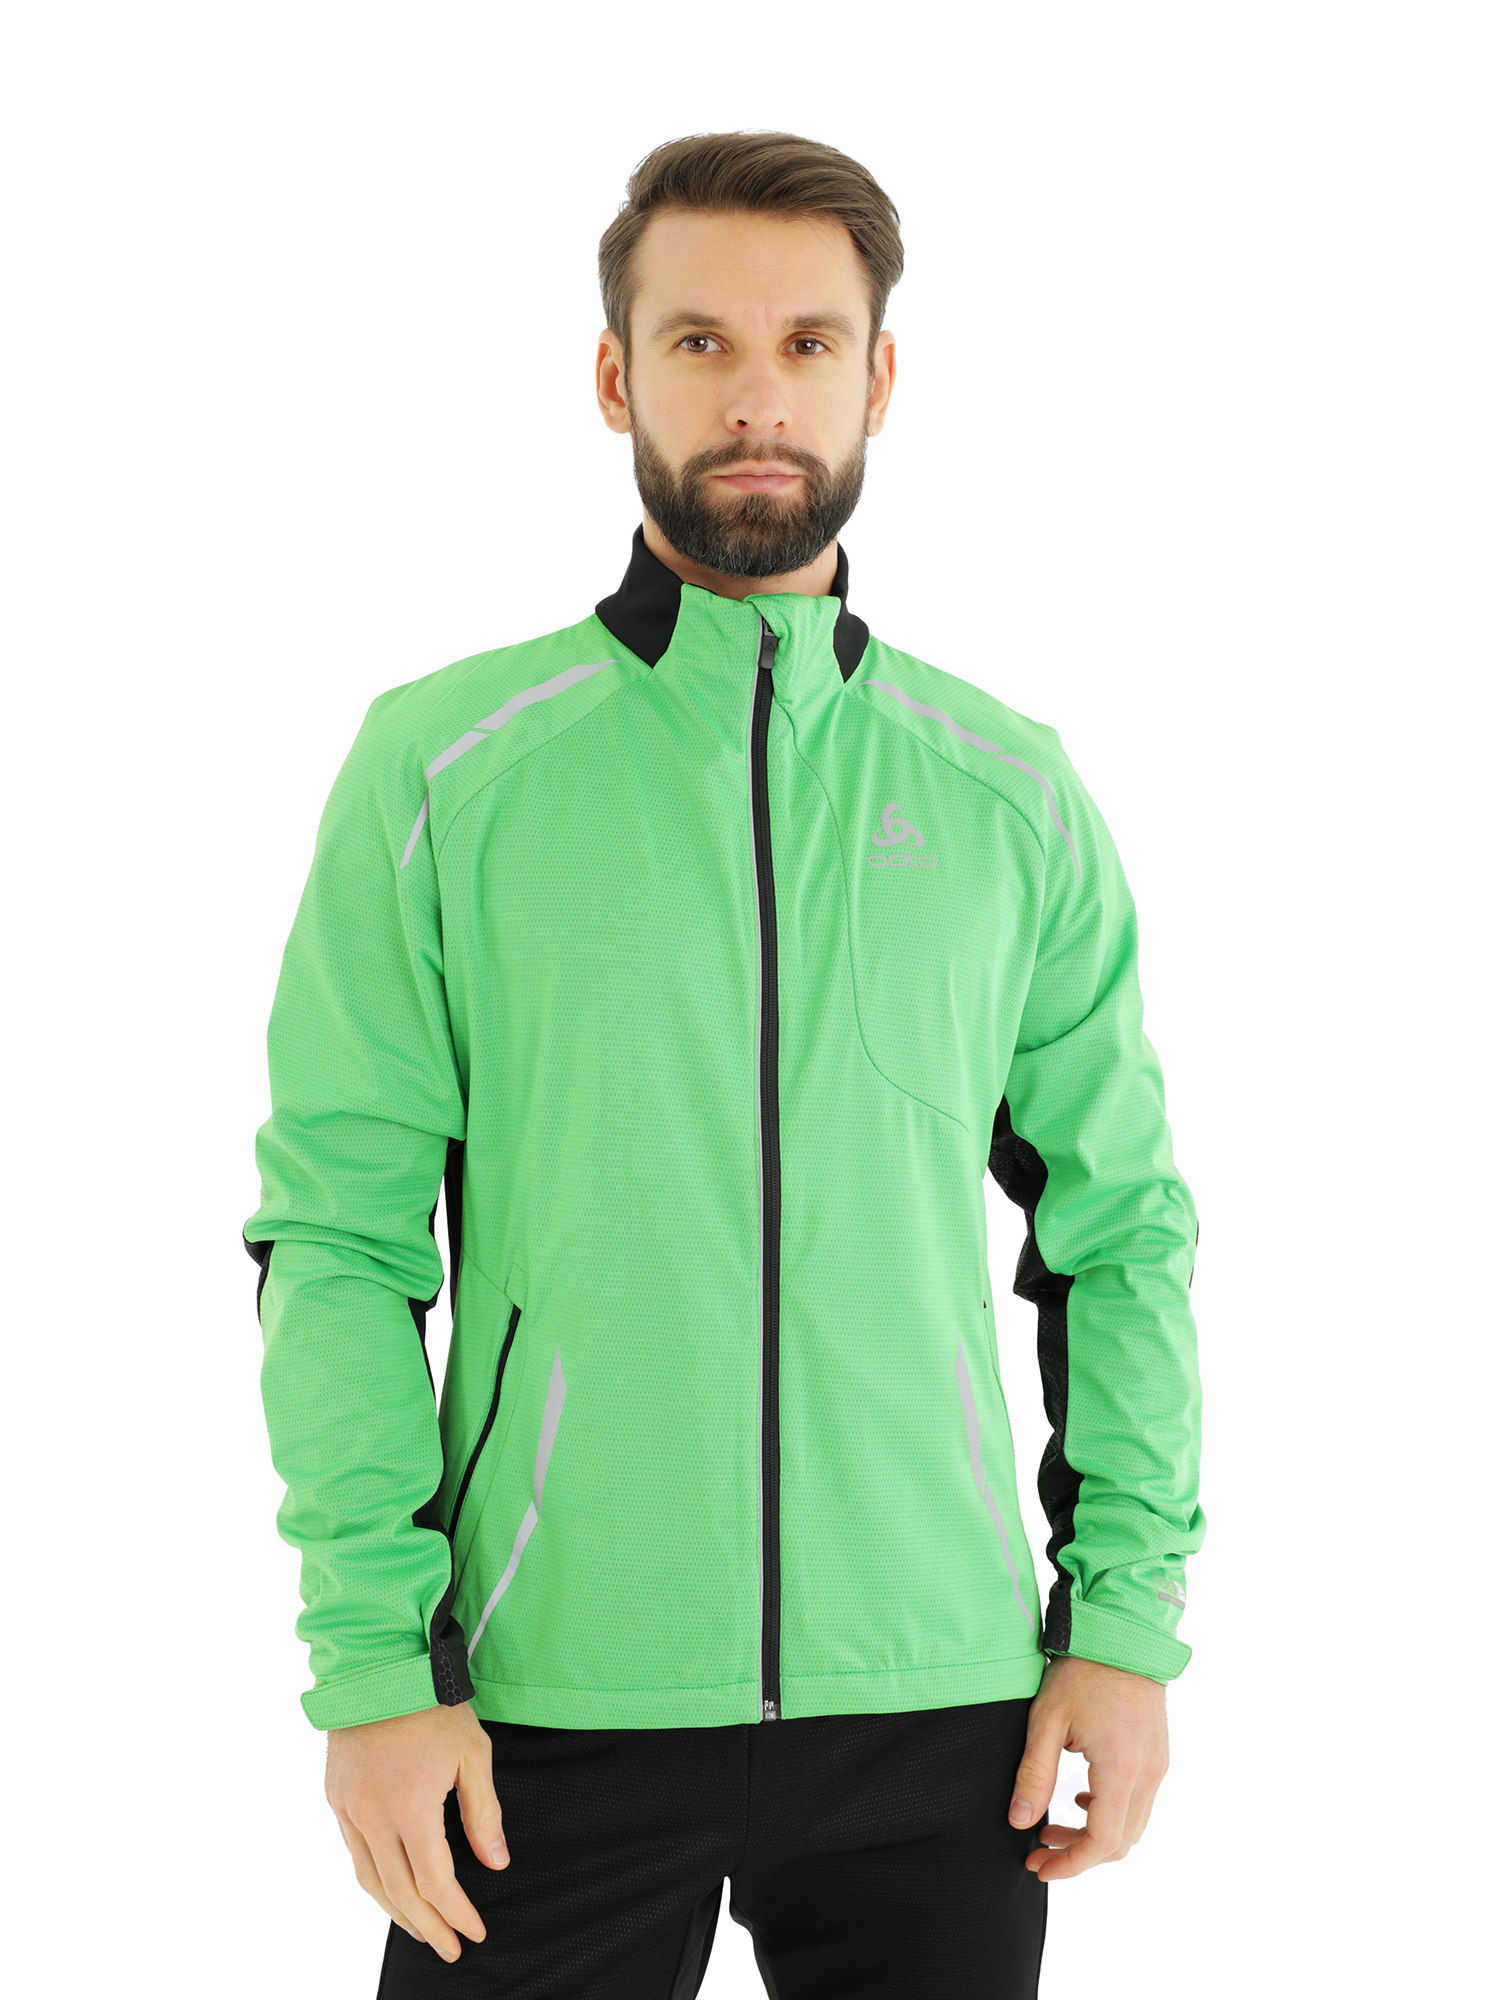 Спортивная куртка мужская Odlo Jacket Frequency зеленая M